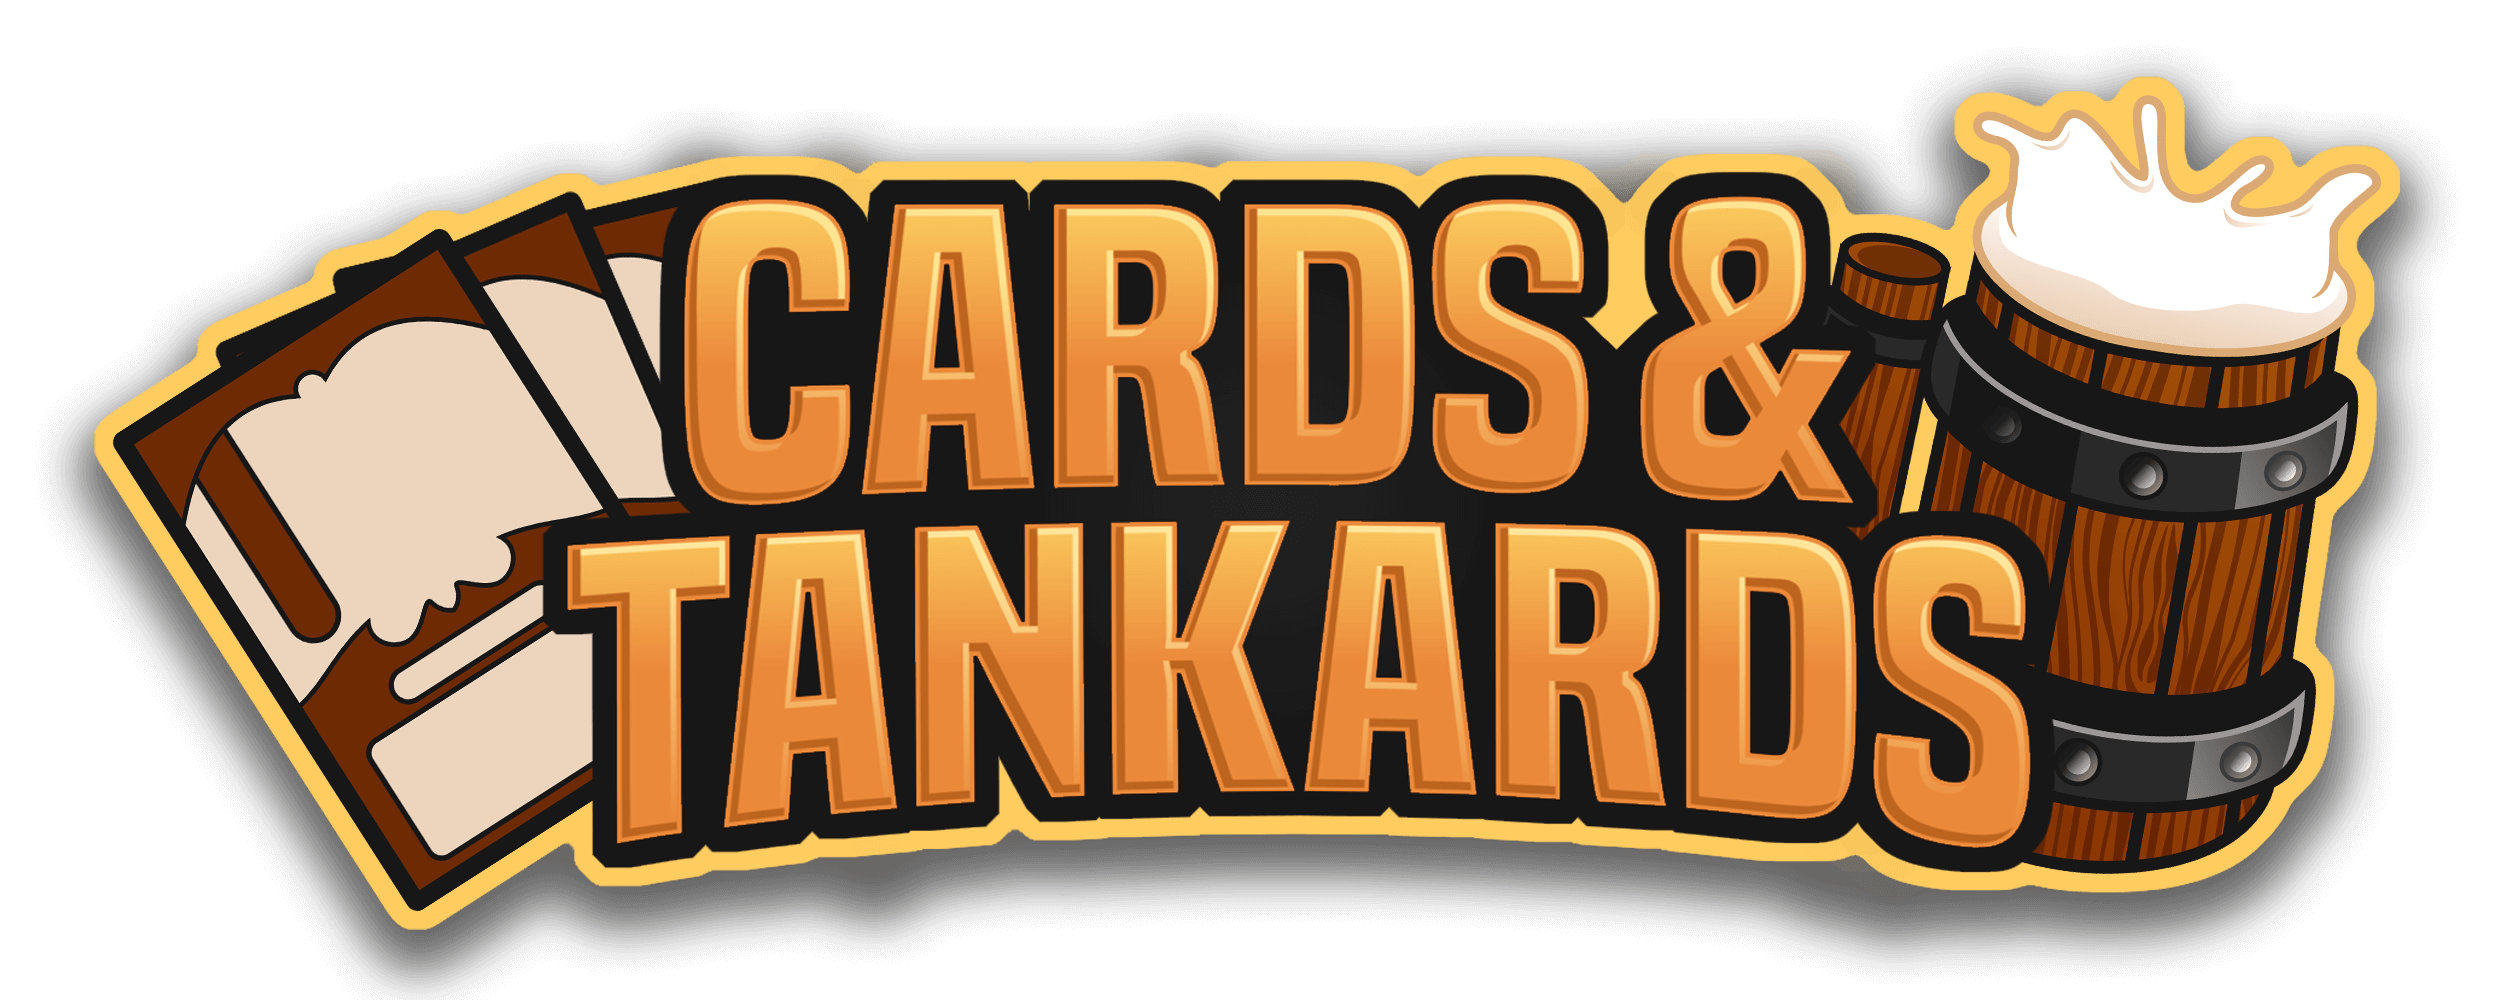 Cards & Tankards logo